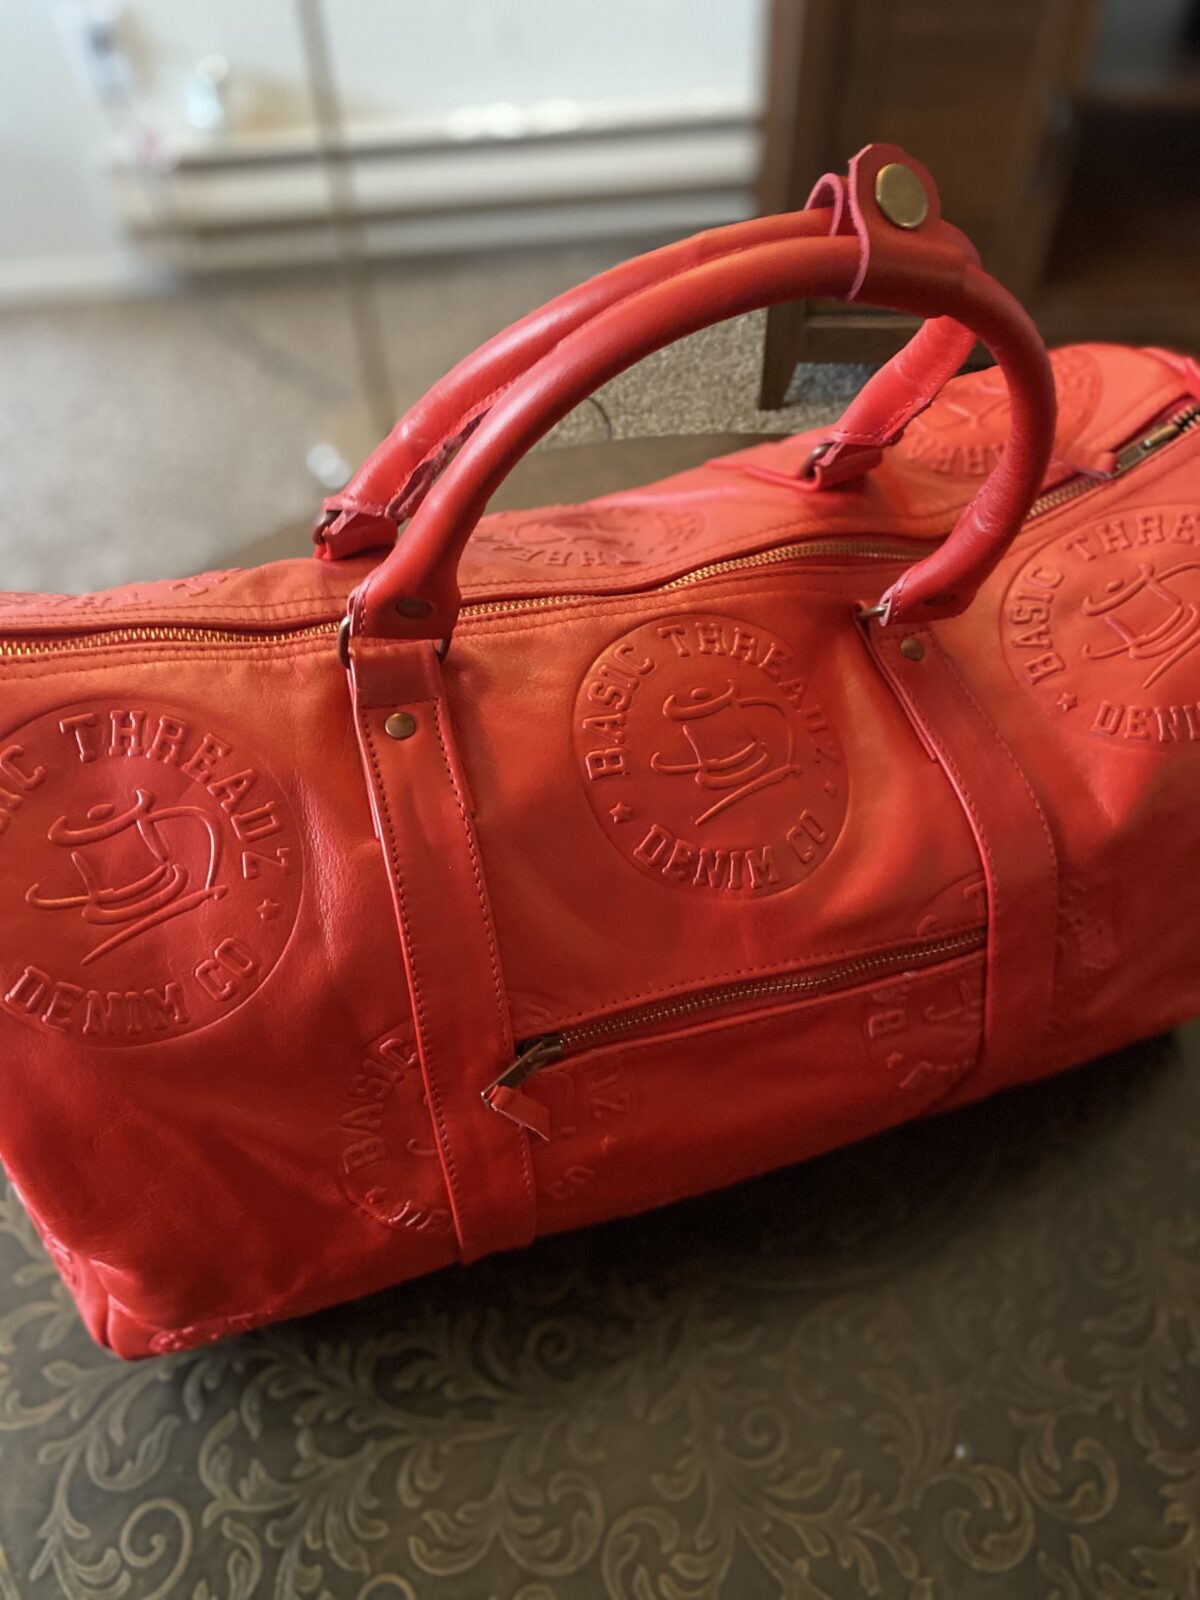 Basic Threadz Mini Travel Bag- Red